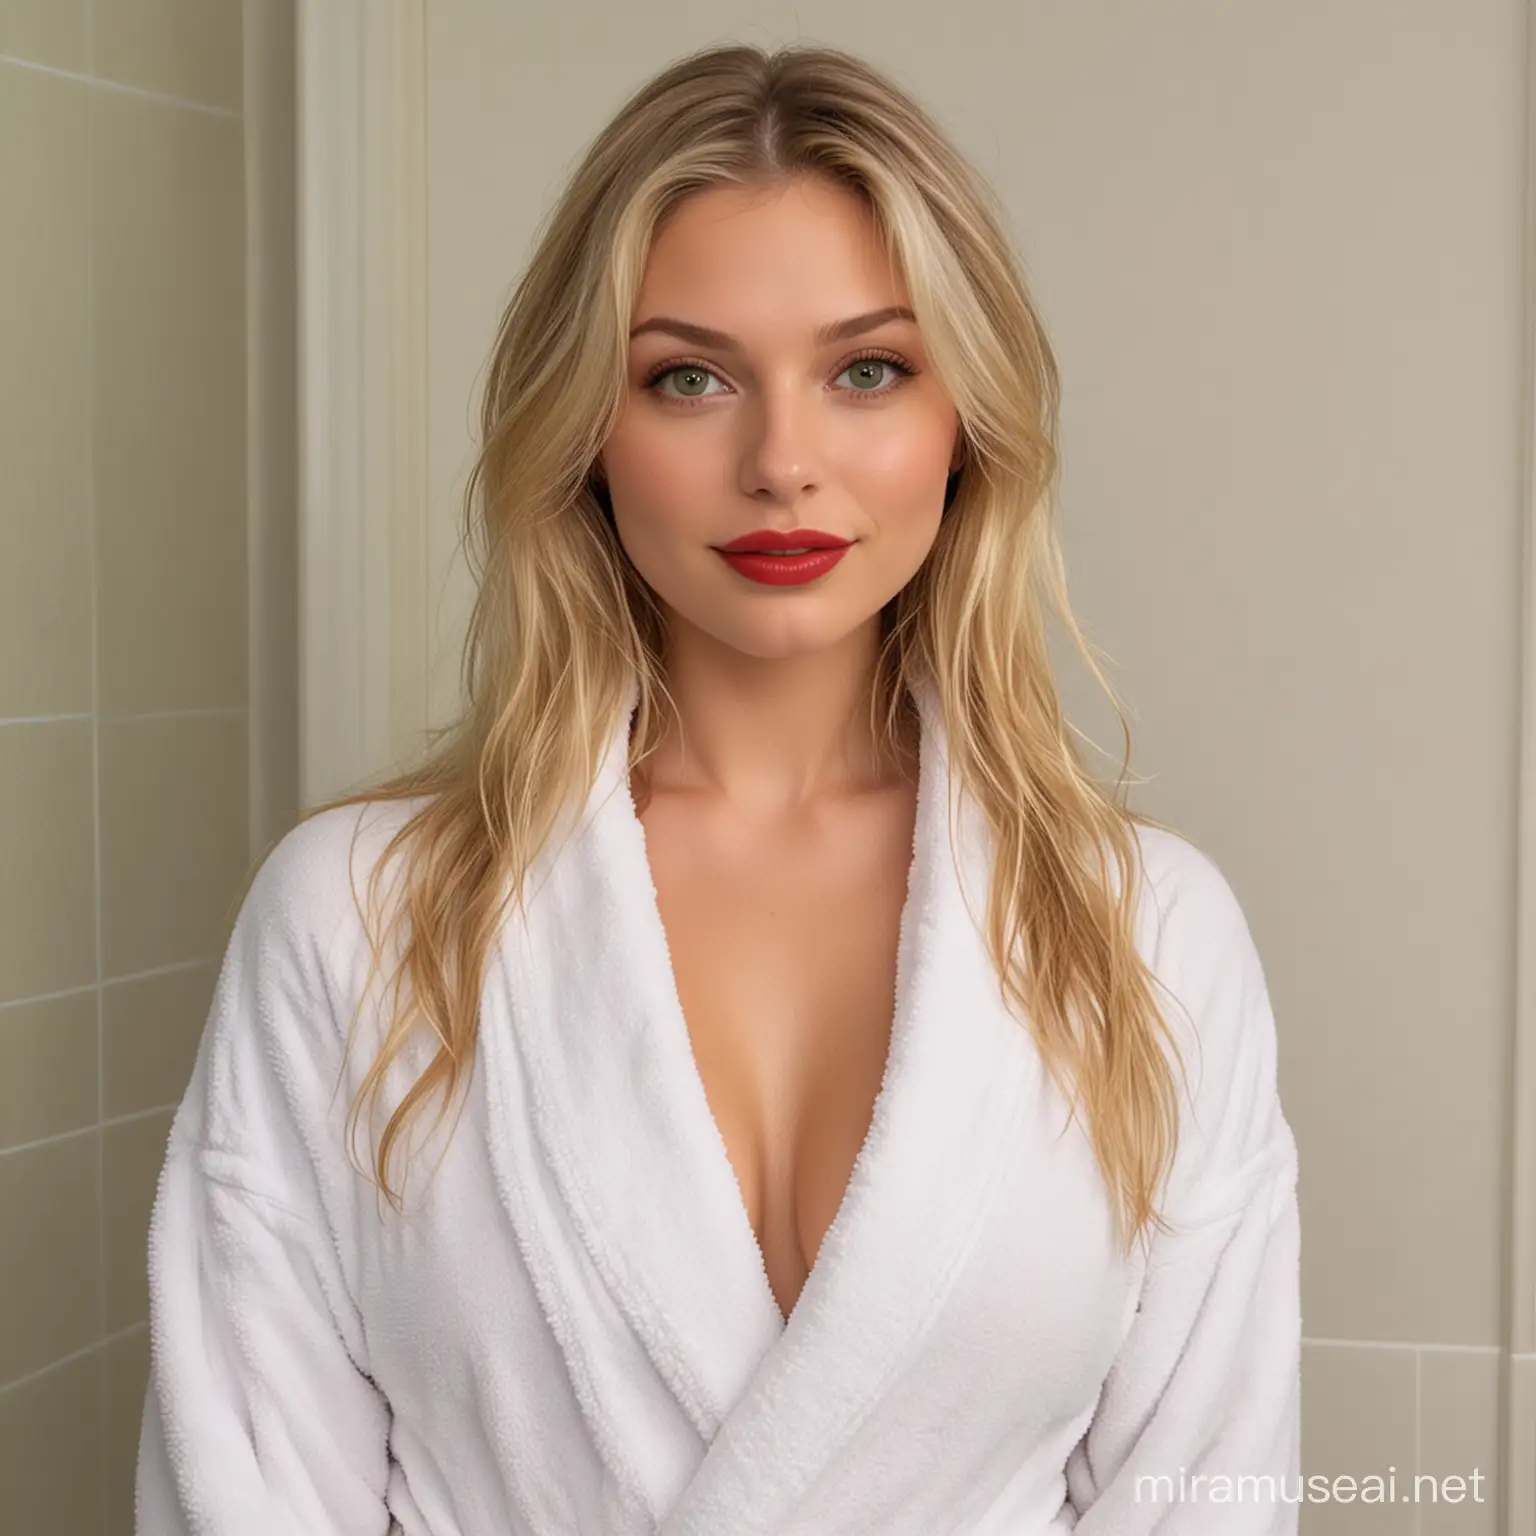 Attractive Blonde Female Student in White Fluffy Bathrobe in Bathroom